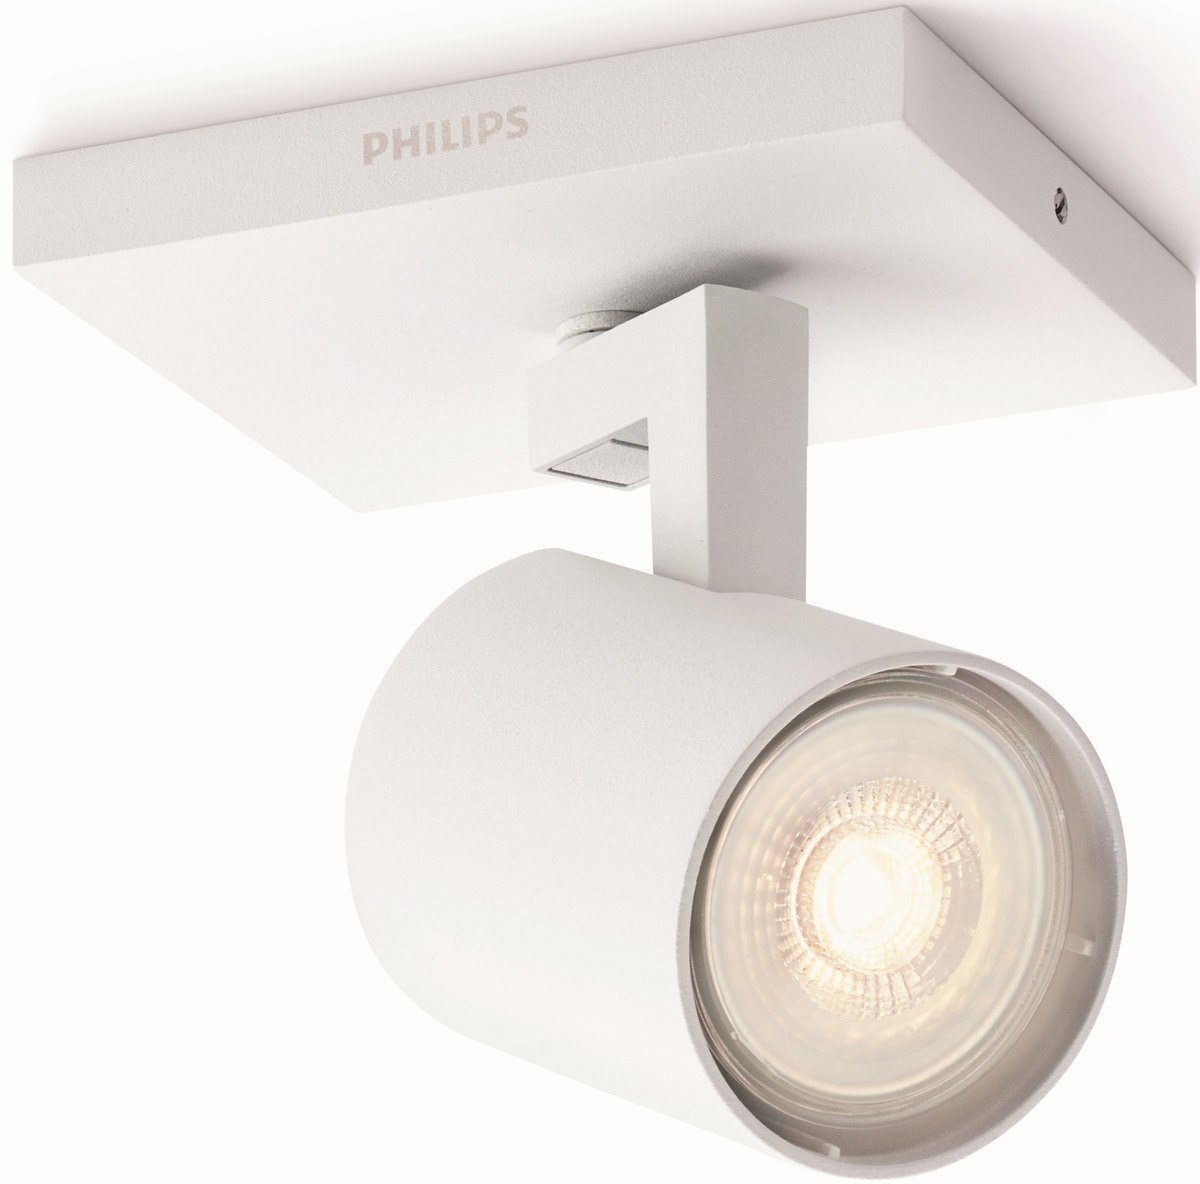 Philips Deckenspot Runner, LED wechselbar, Warmweiß, myLiving LED Spot 1flg. 230lm, Weiß